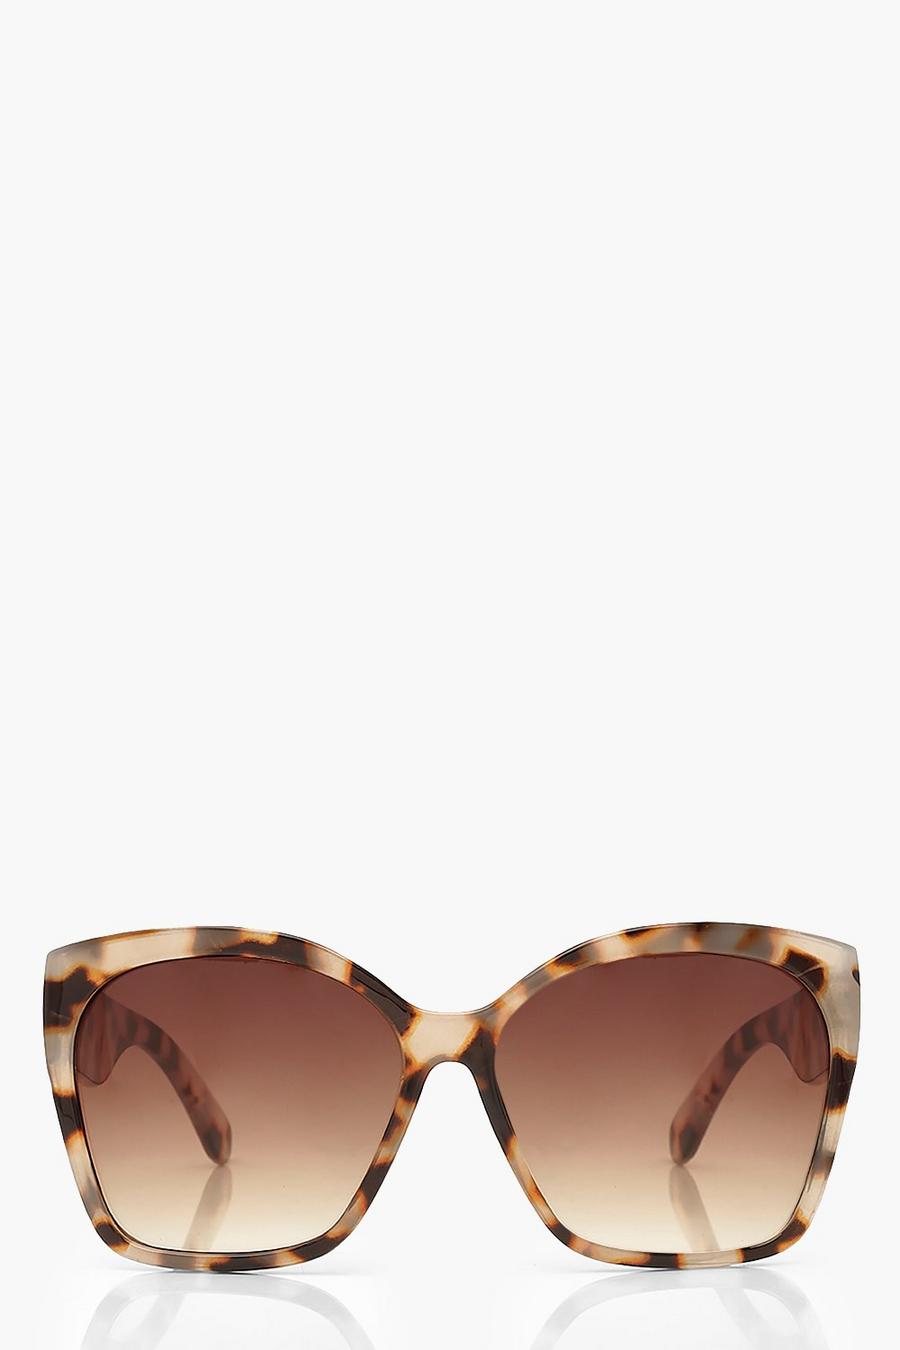 Cream white Oversized Tortoise Shell Sunglasses